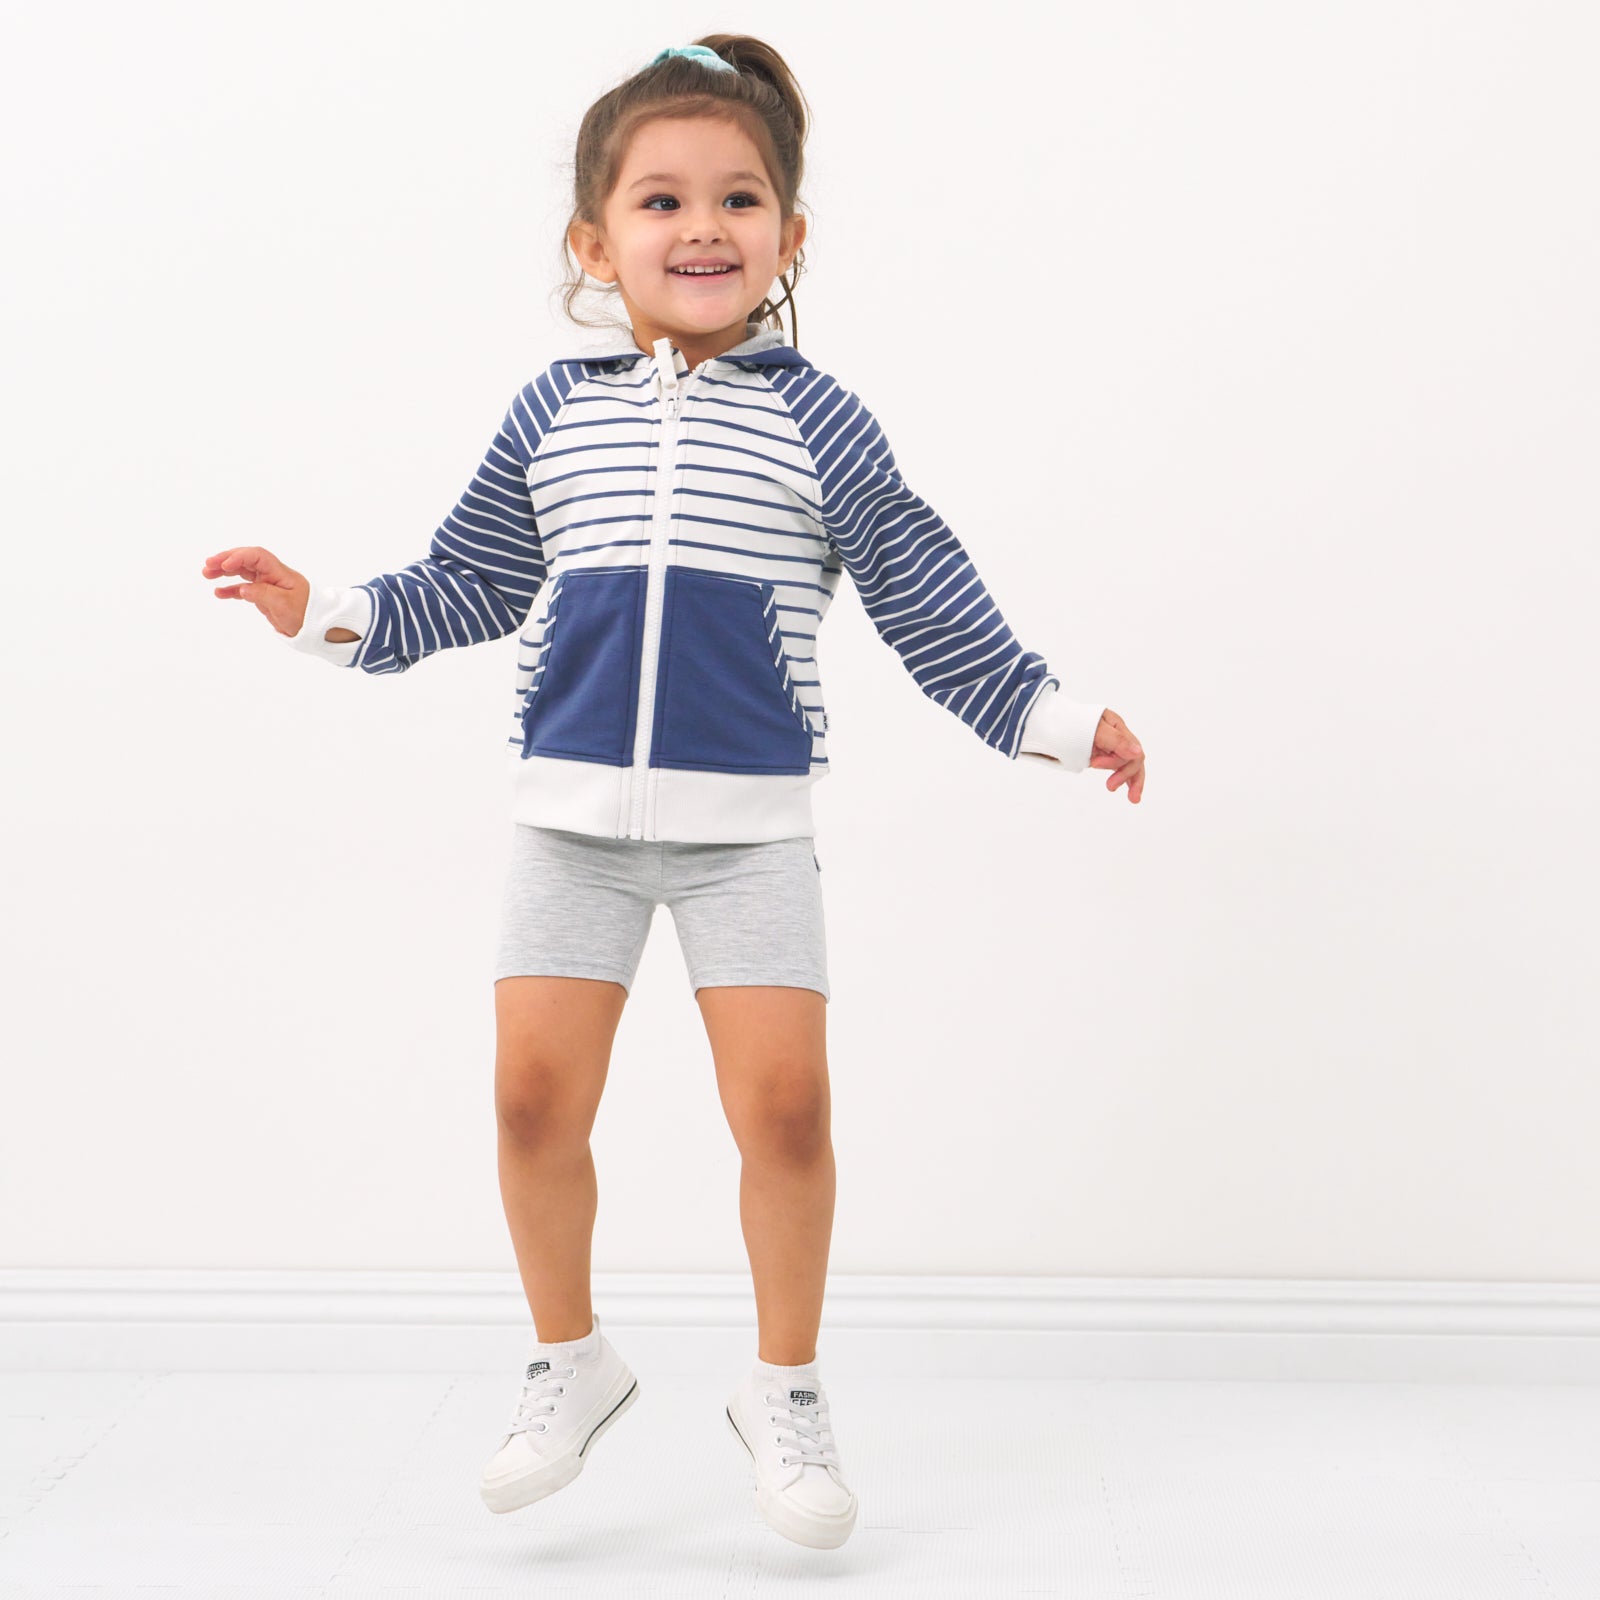 Child wearing Light Heather Gray bike shorts and coordinating zip hoodie